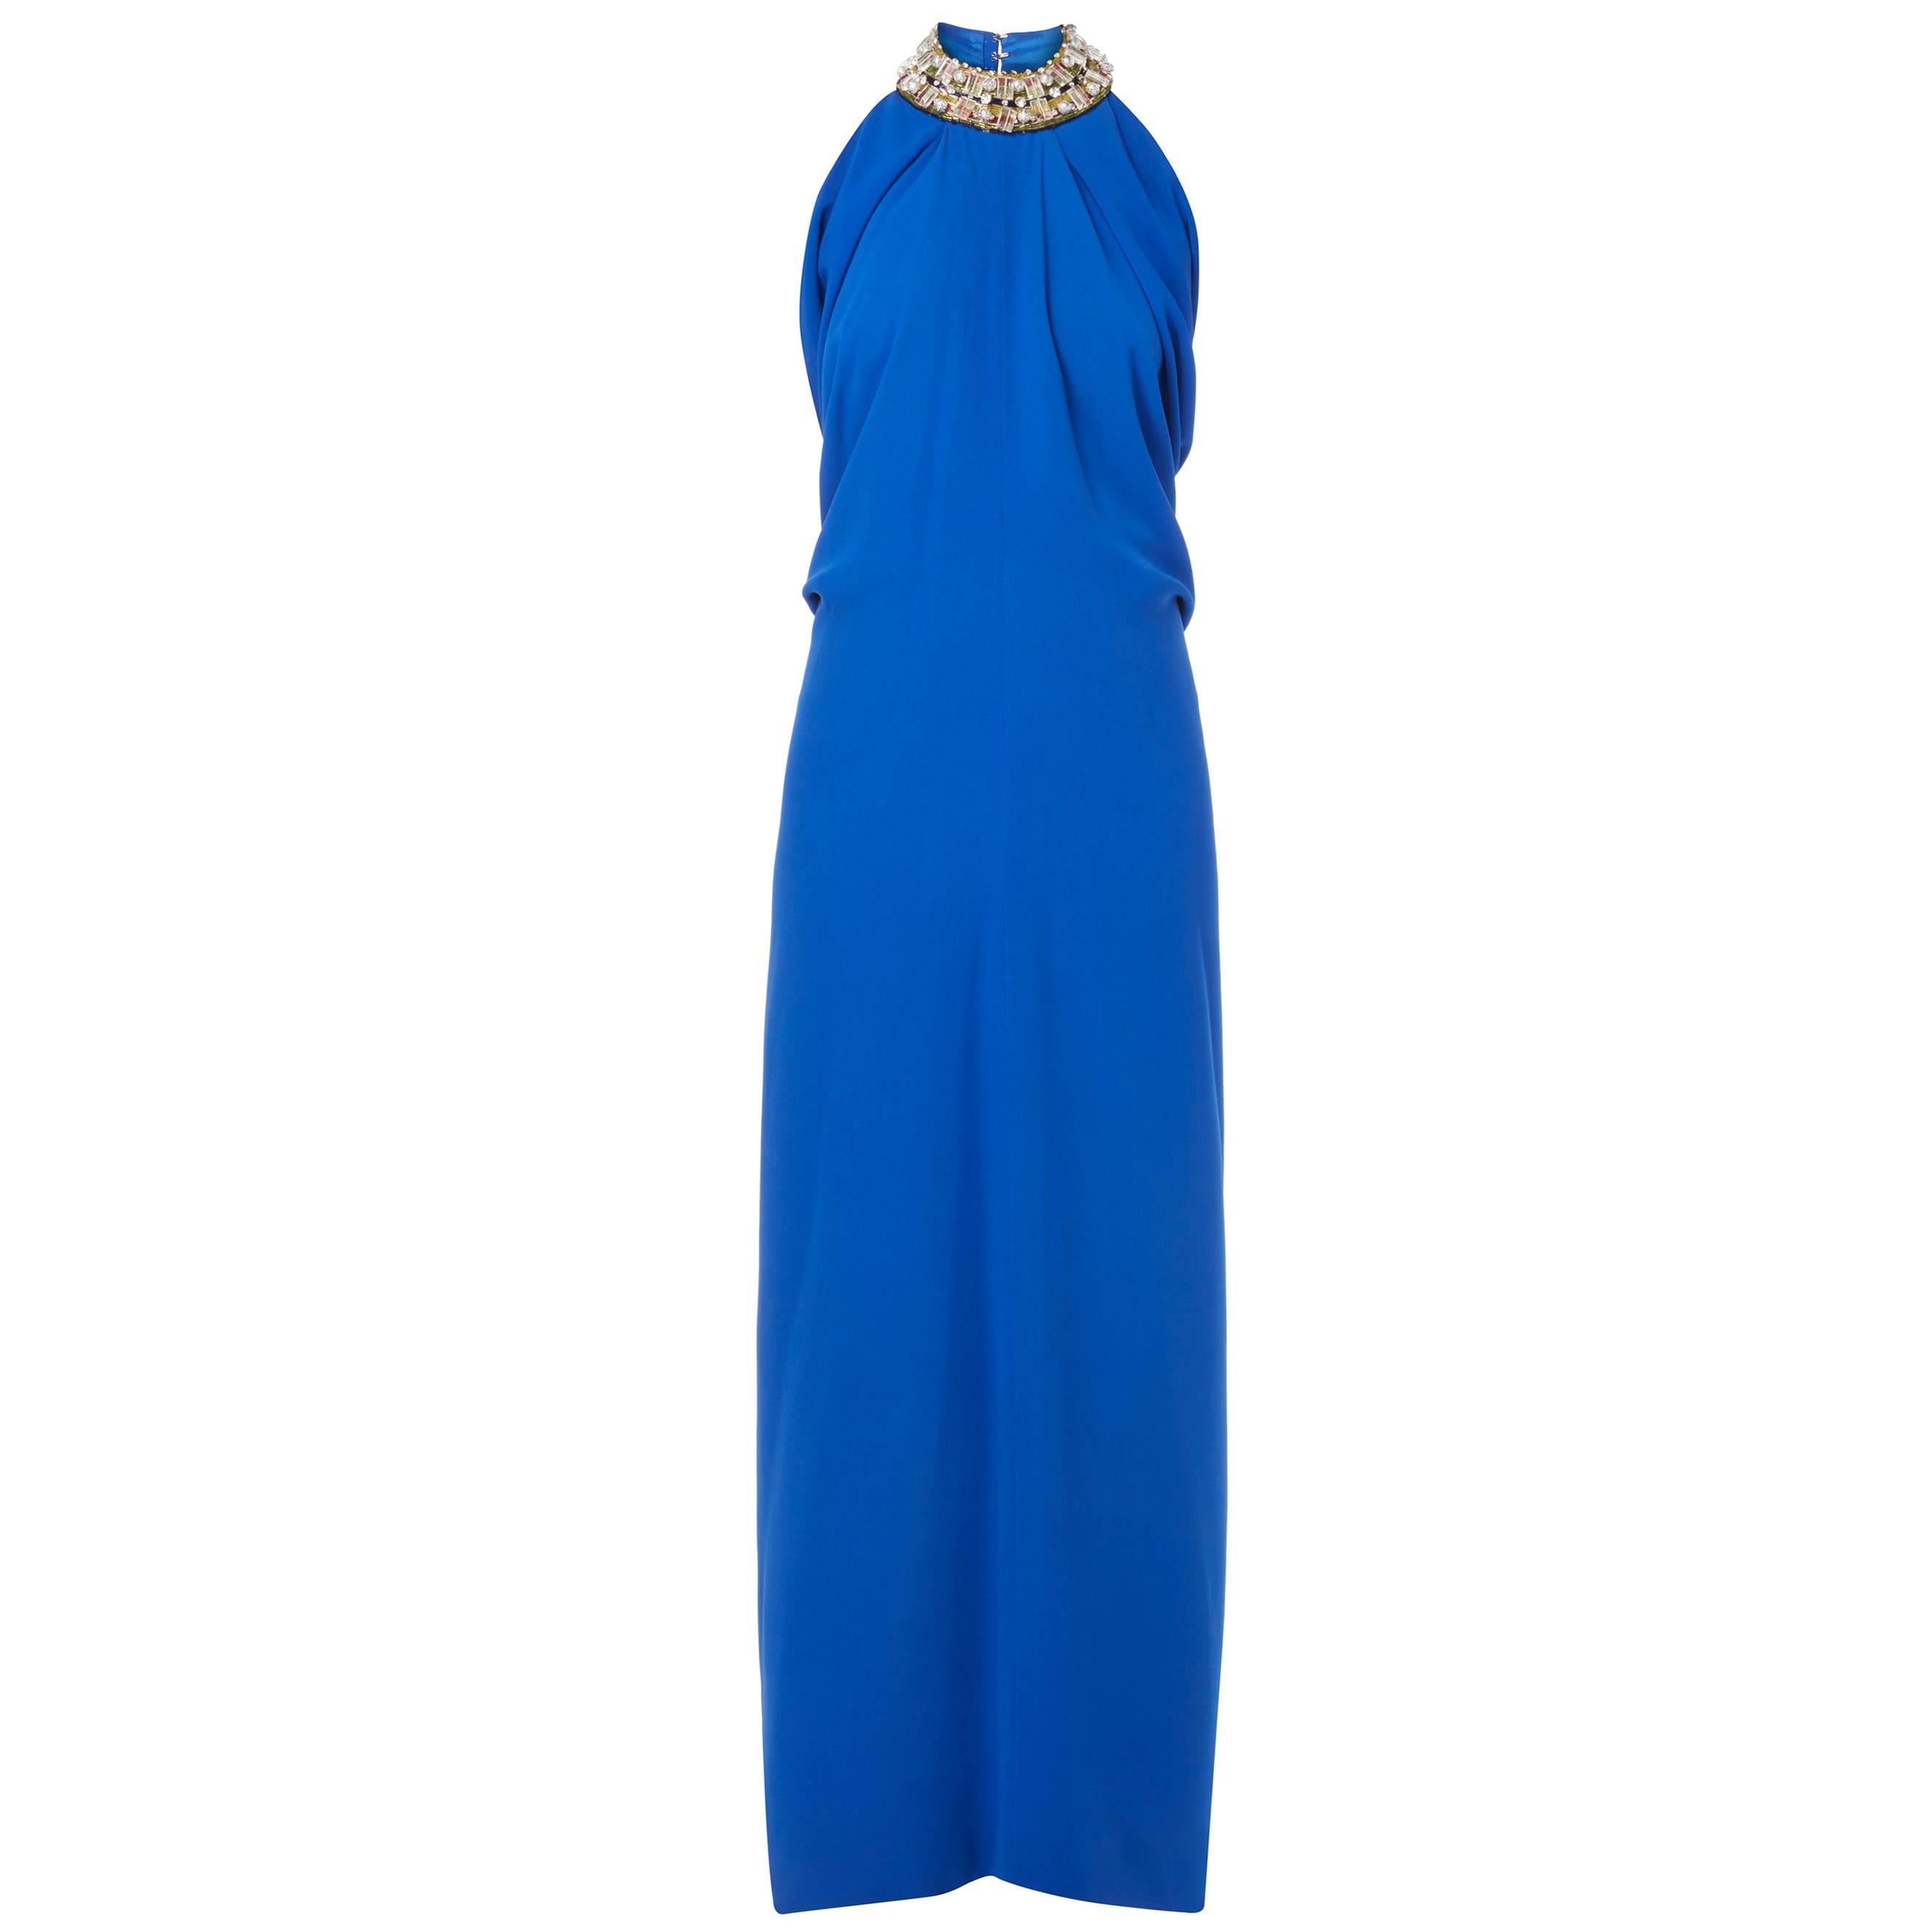 Pierre Cardin haute couture blue gown, circa 1970 For Sale